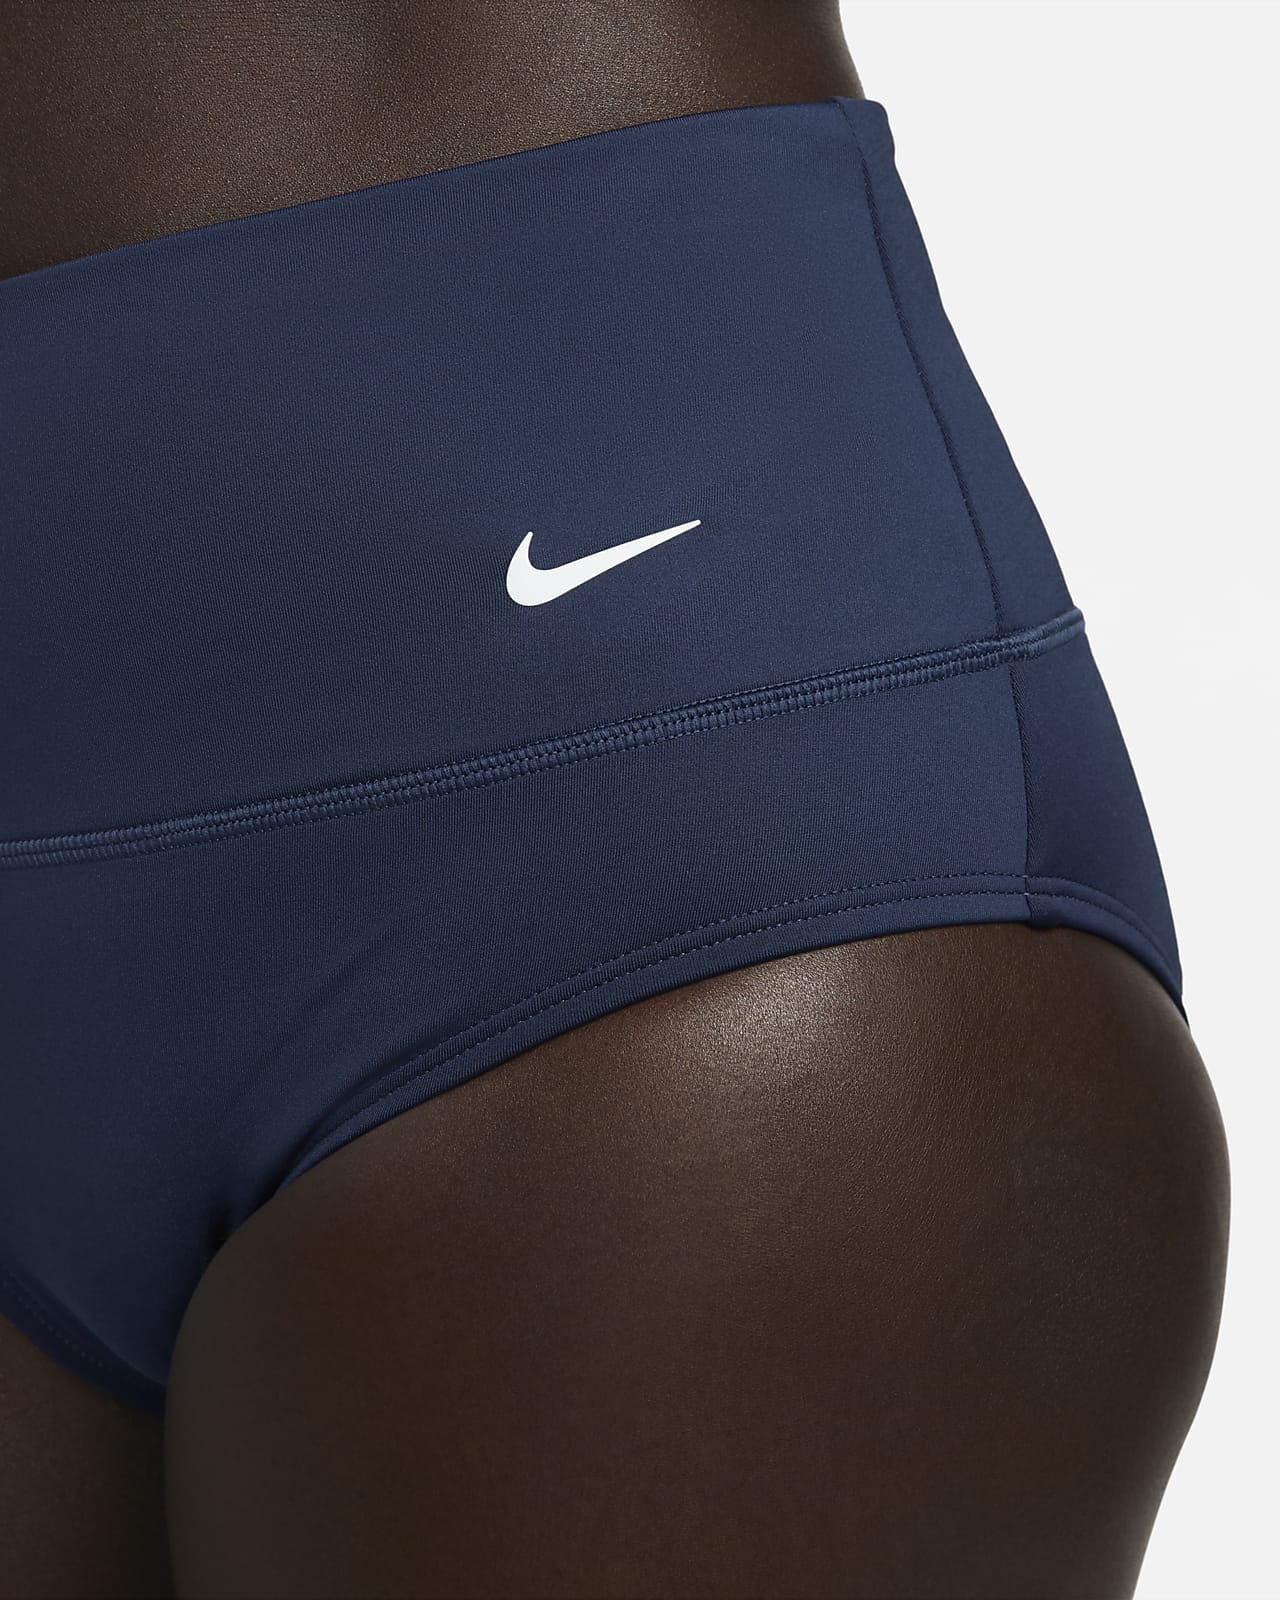 Women's Nike Black High Leg Brief Swim Clothing